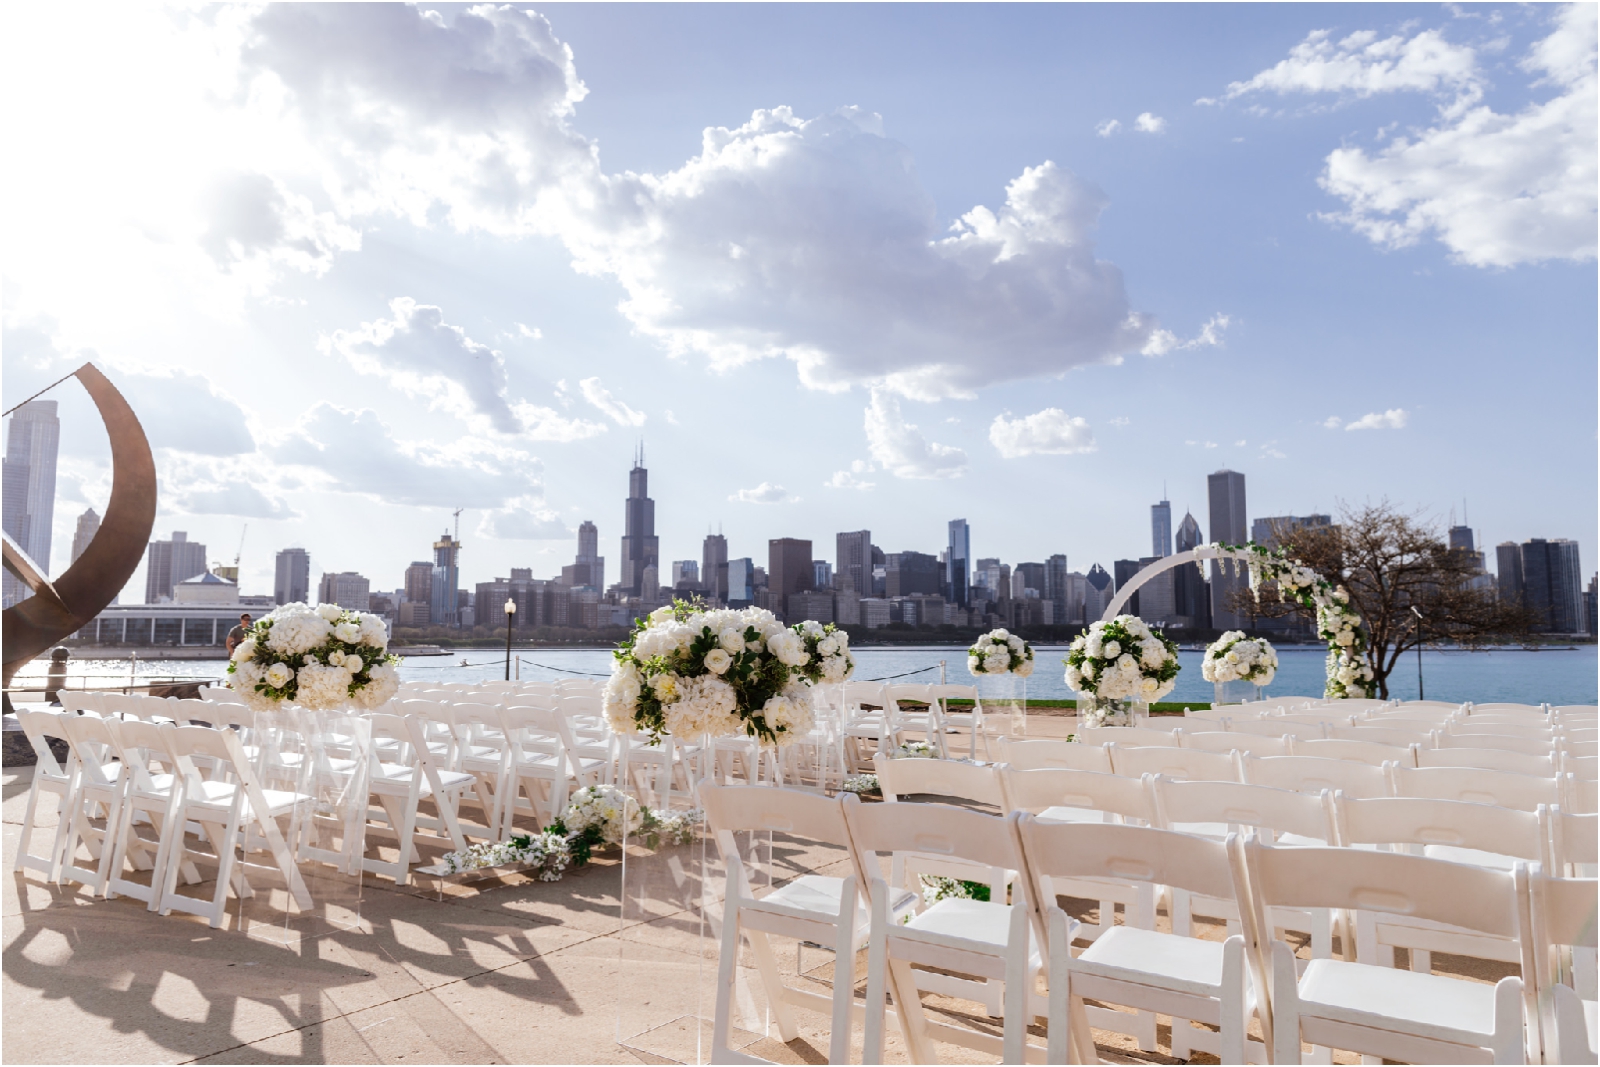 Adler Planetarium Wedding Ceremony | Chicago Wedding Photographer 